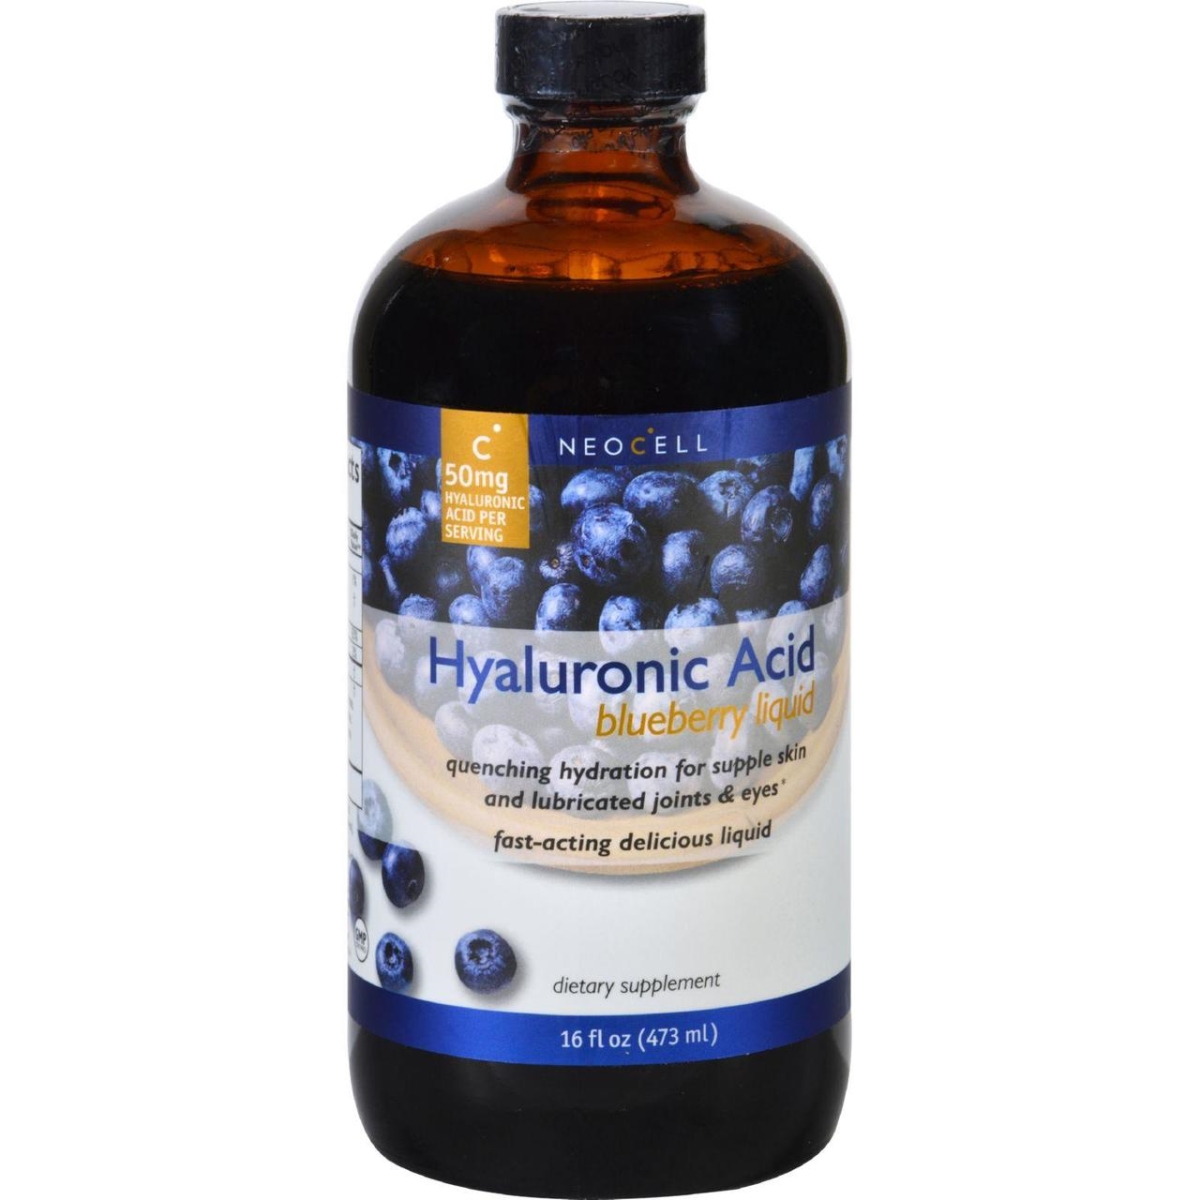 Hg1185180 16 Oz Hyaluronic Acid - Blueberry Liquid